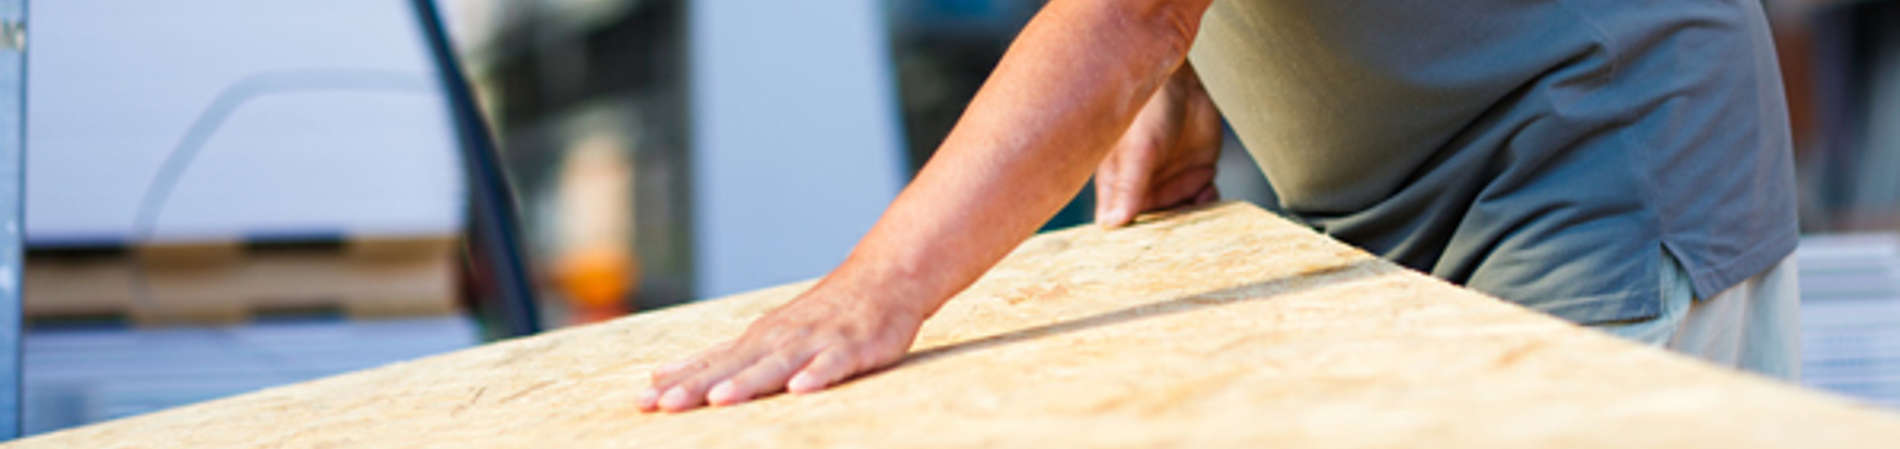 Instalar carpintaria de madeira